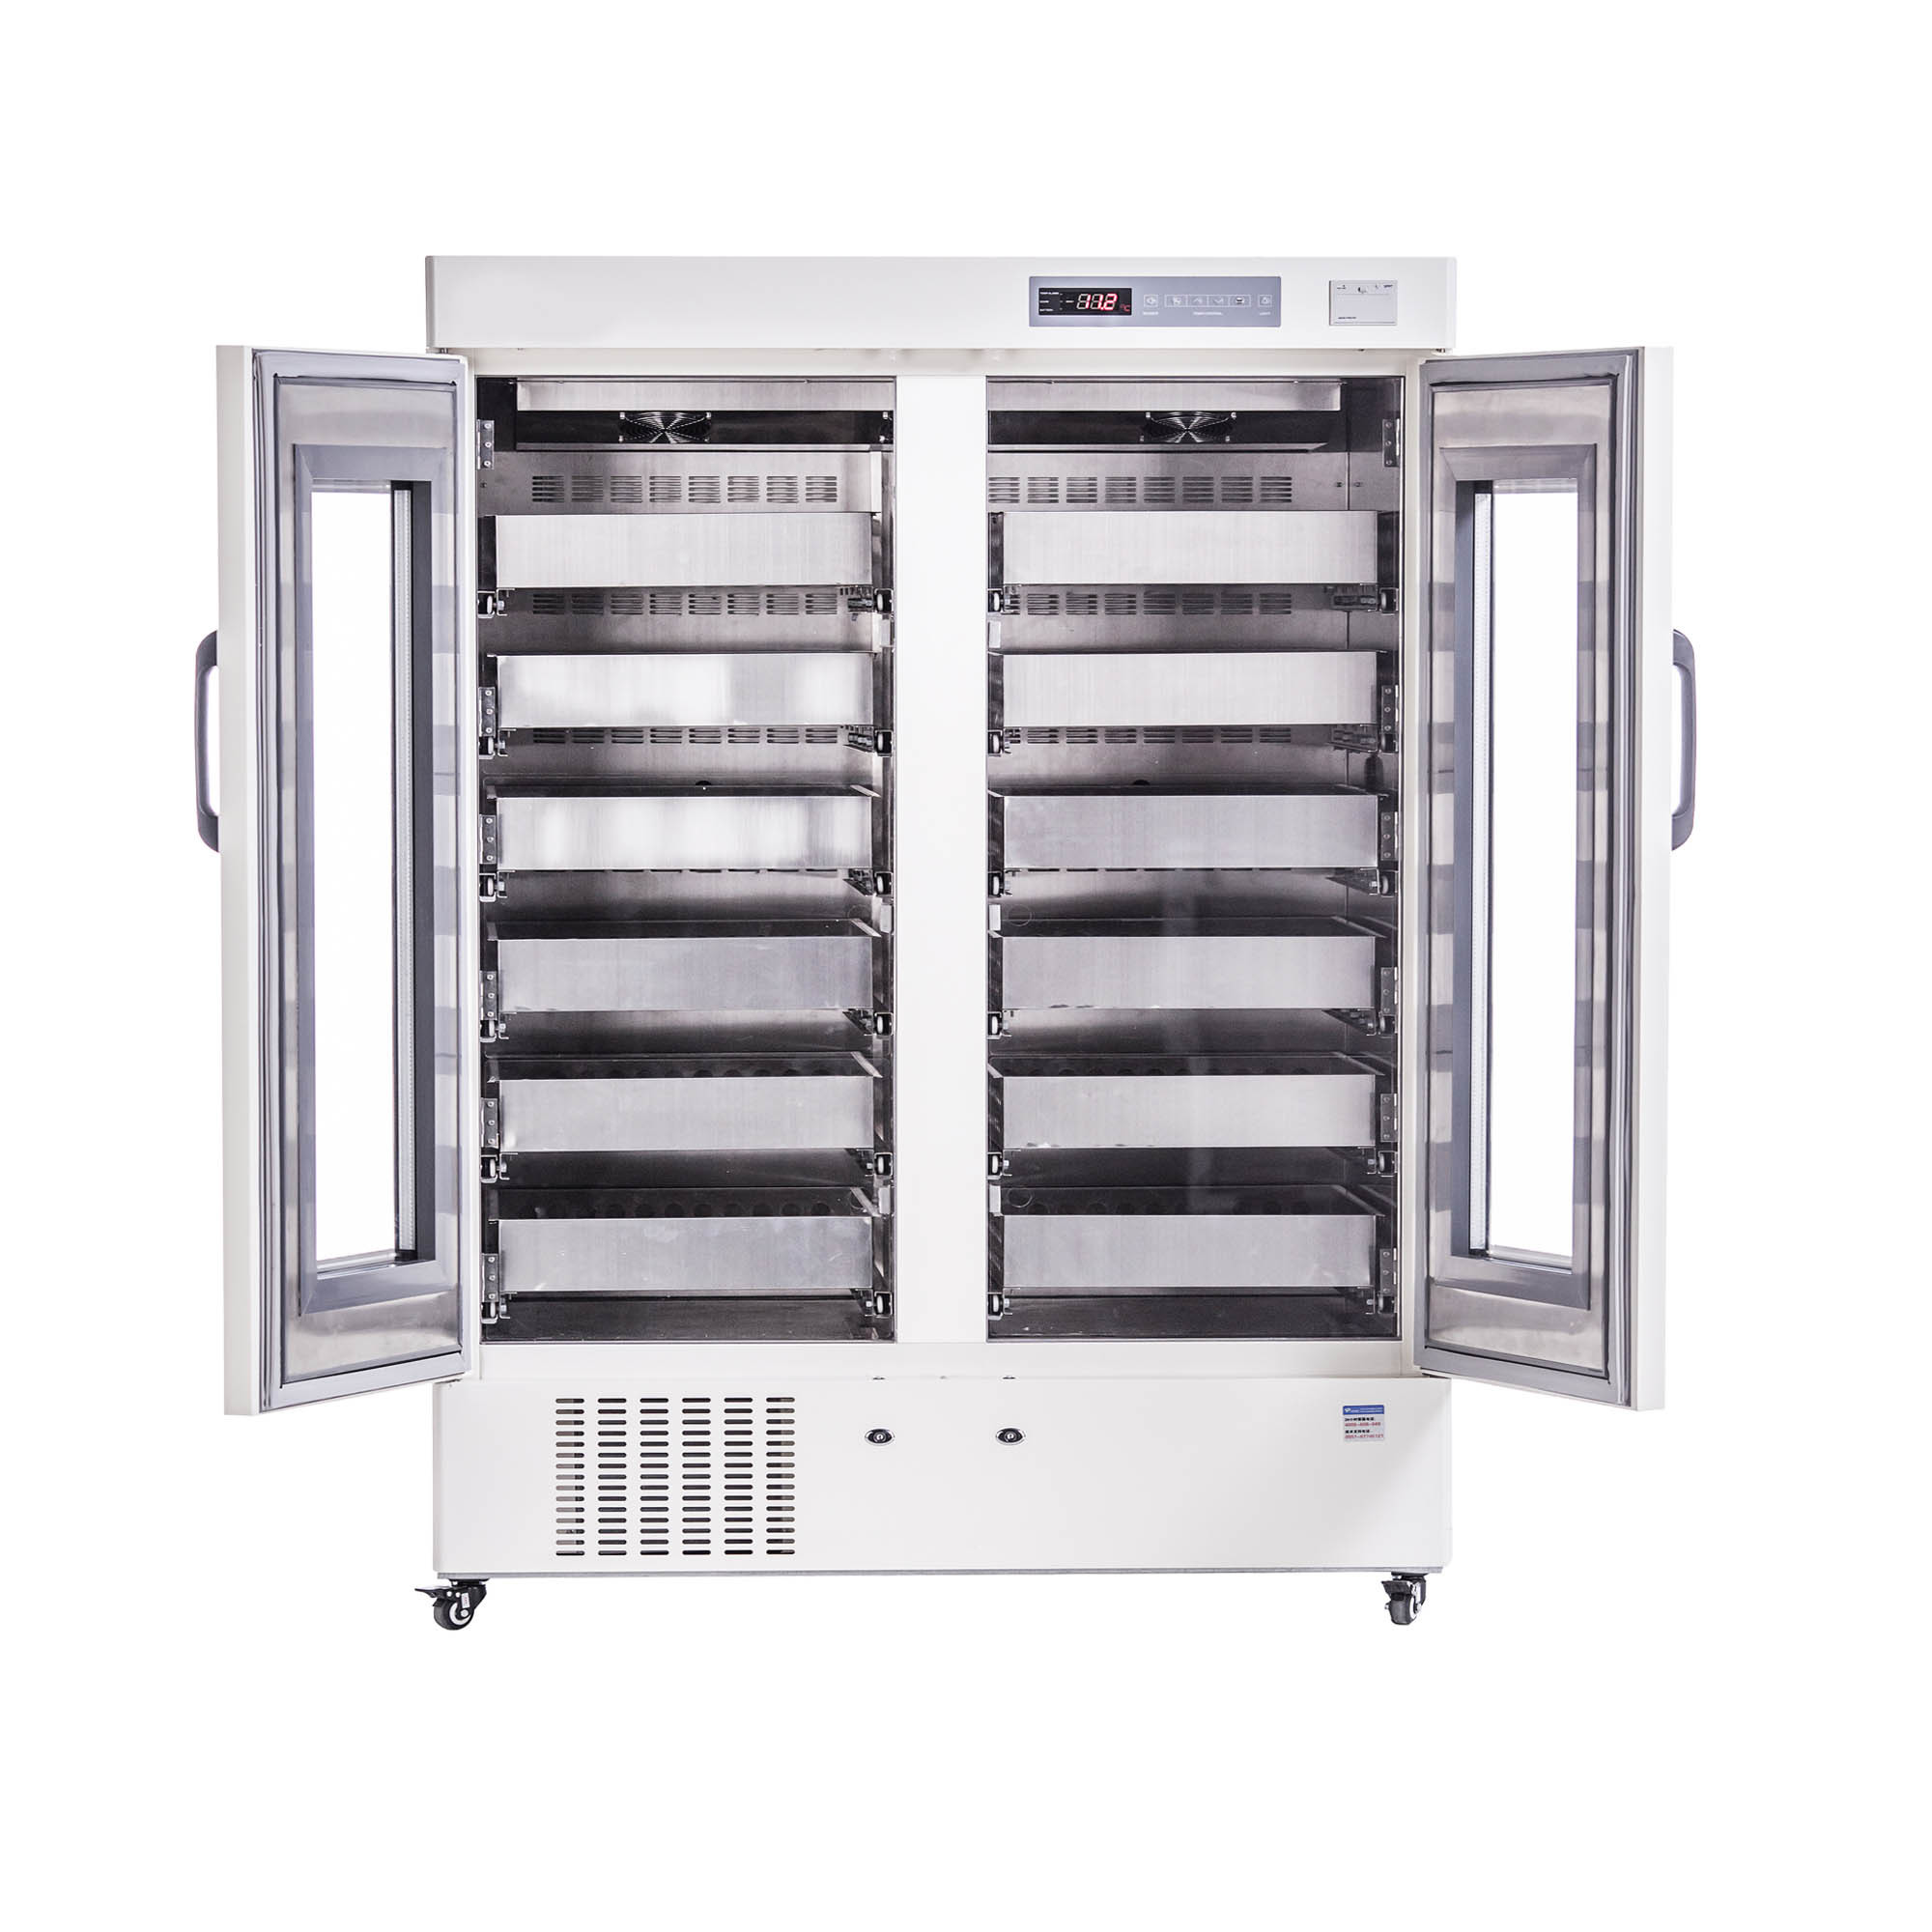 4 Degrees Stainless Steel Vertical Hospital Blood Bank Refrigerator 1008 Liter